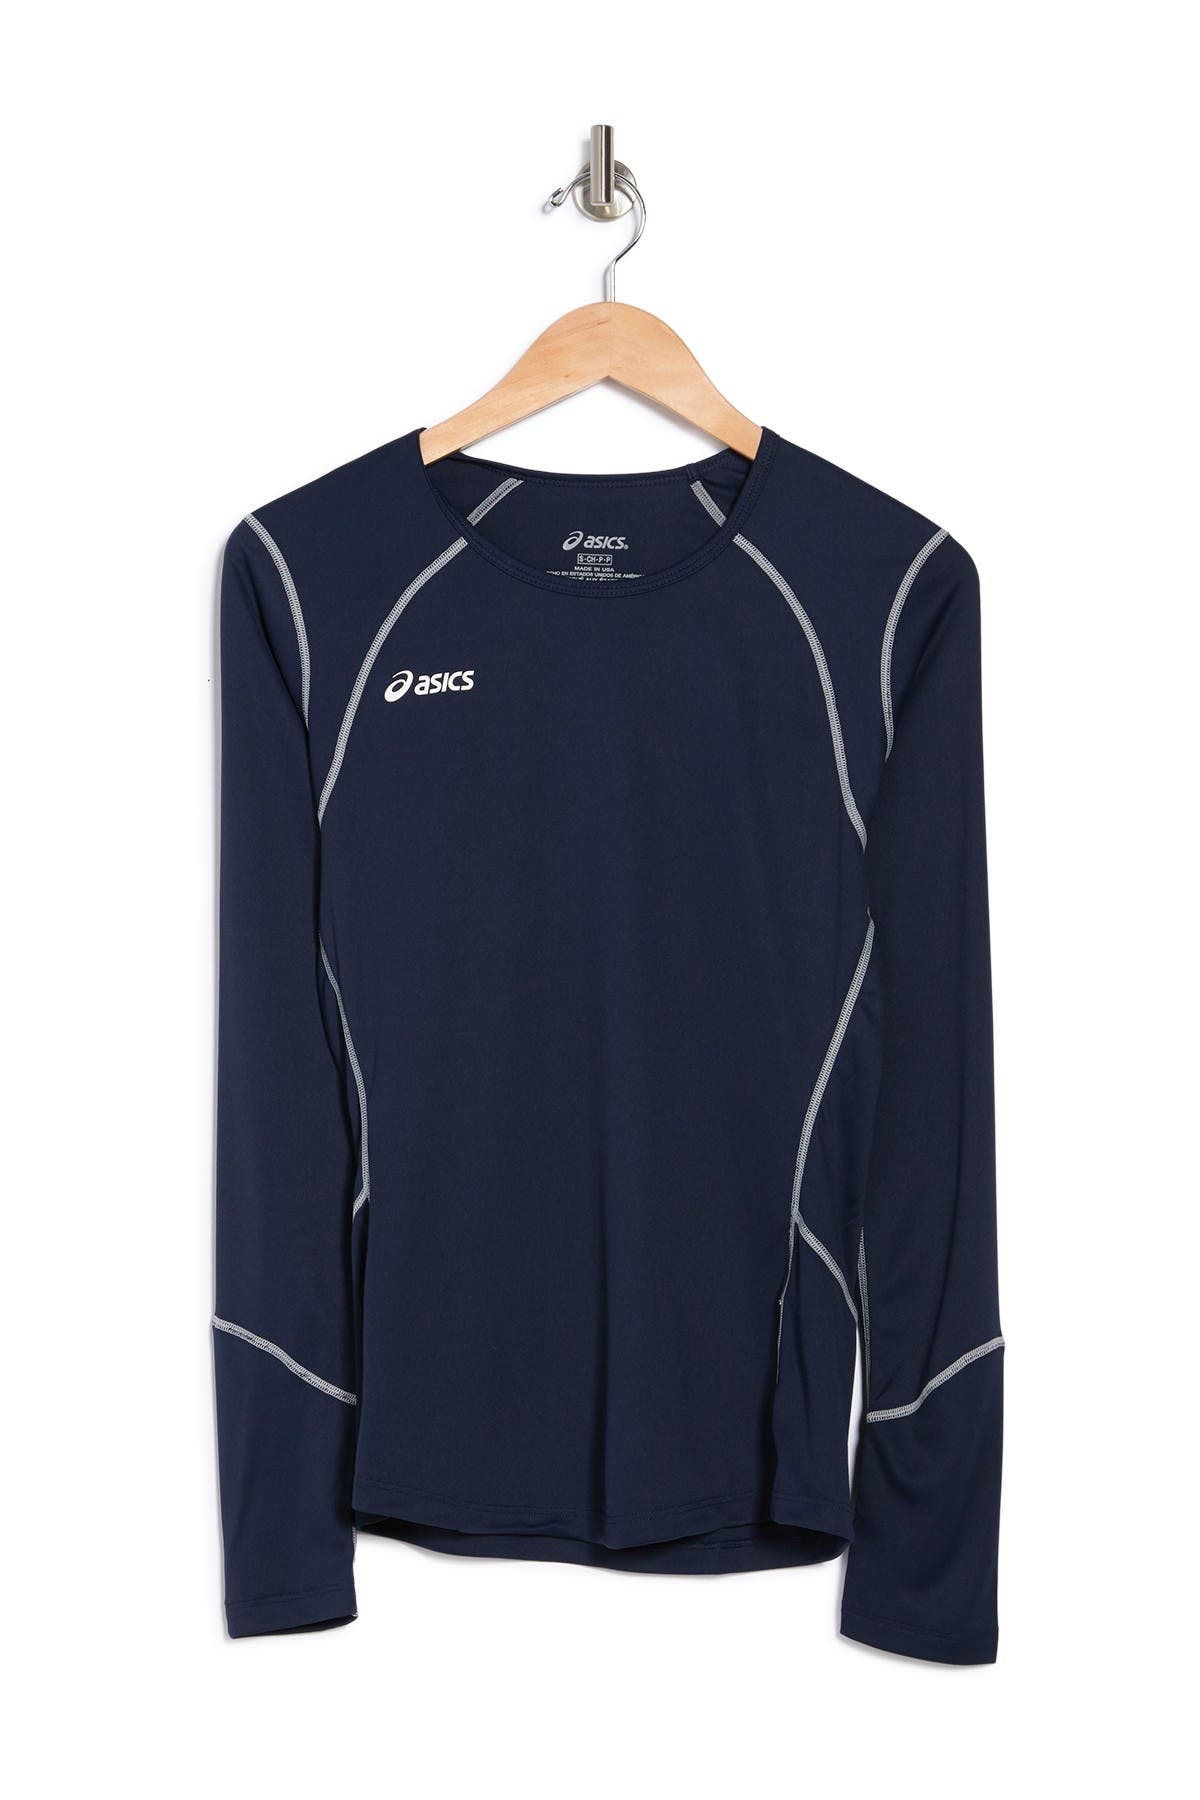 Asics Volleycross Long Sleeve Jersey In Navy/steel Grey